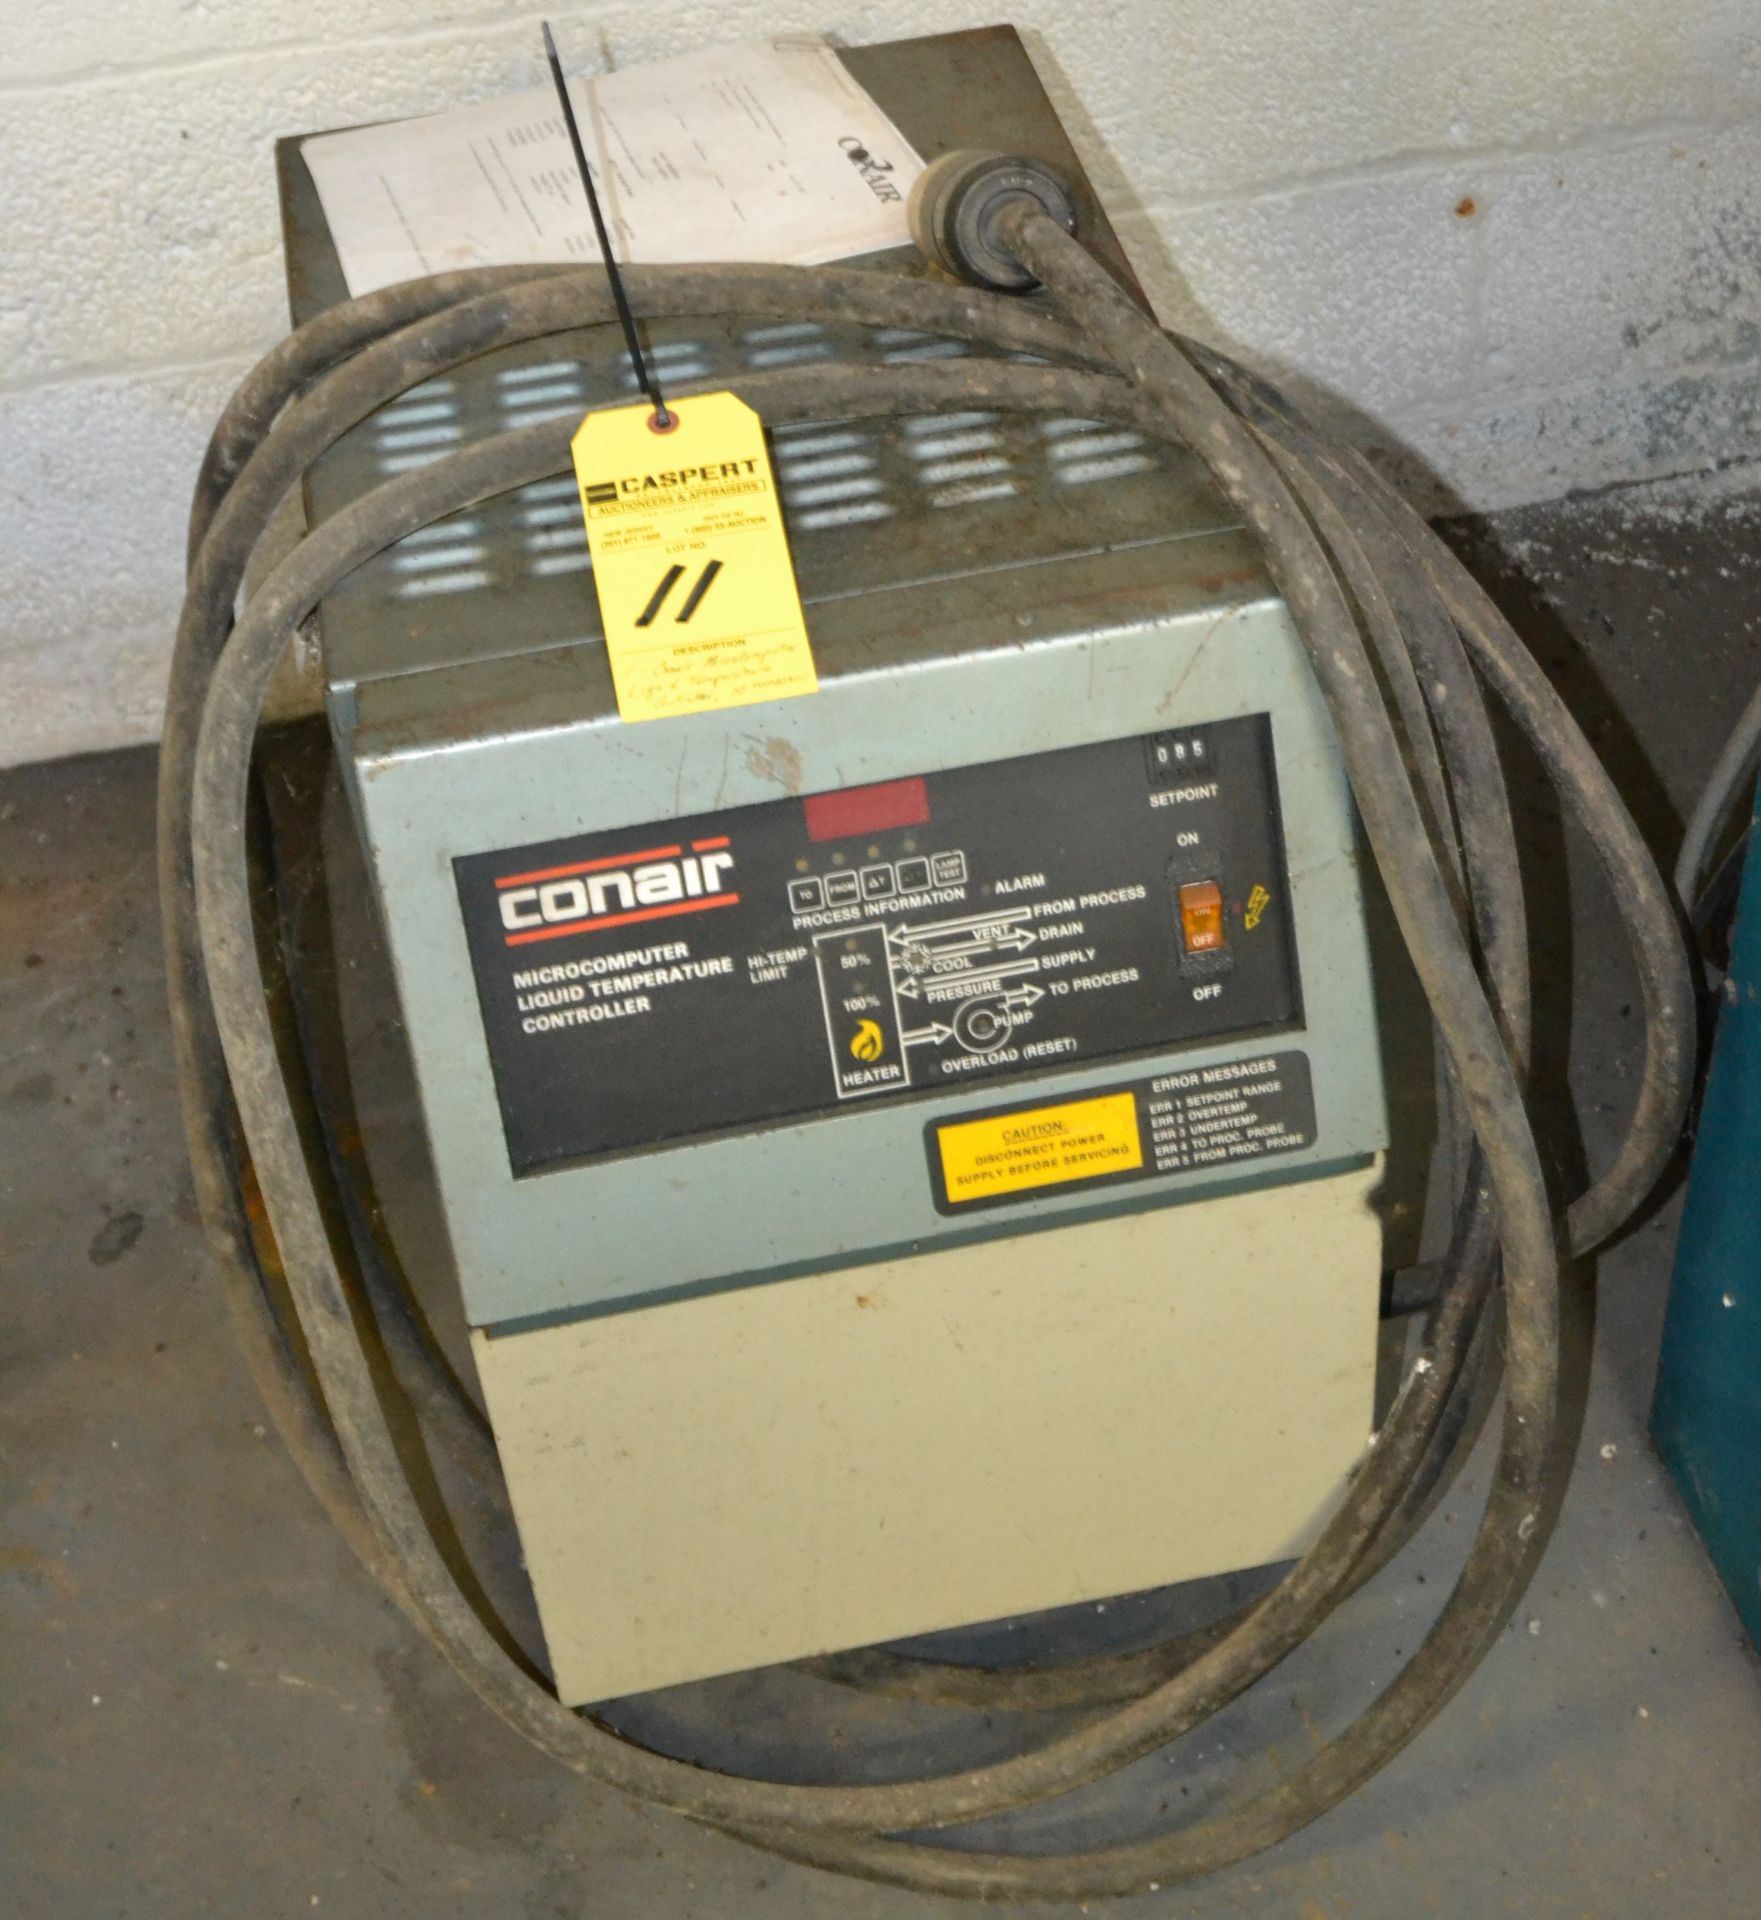 Conair Microcomputer Liquid Temperature Controller, M: MSMB2B00